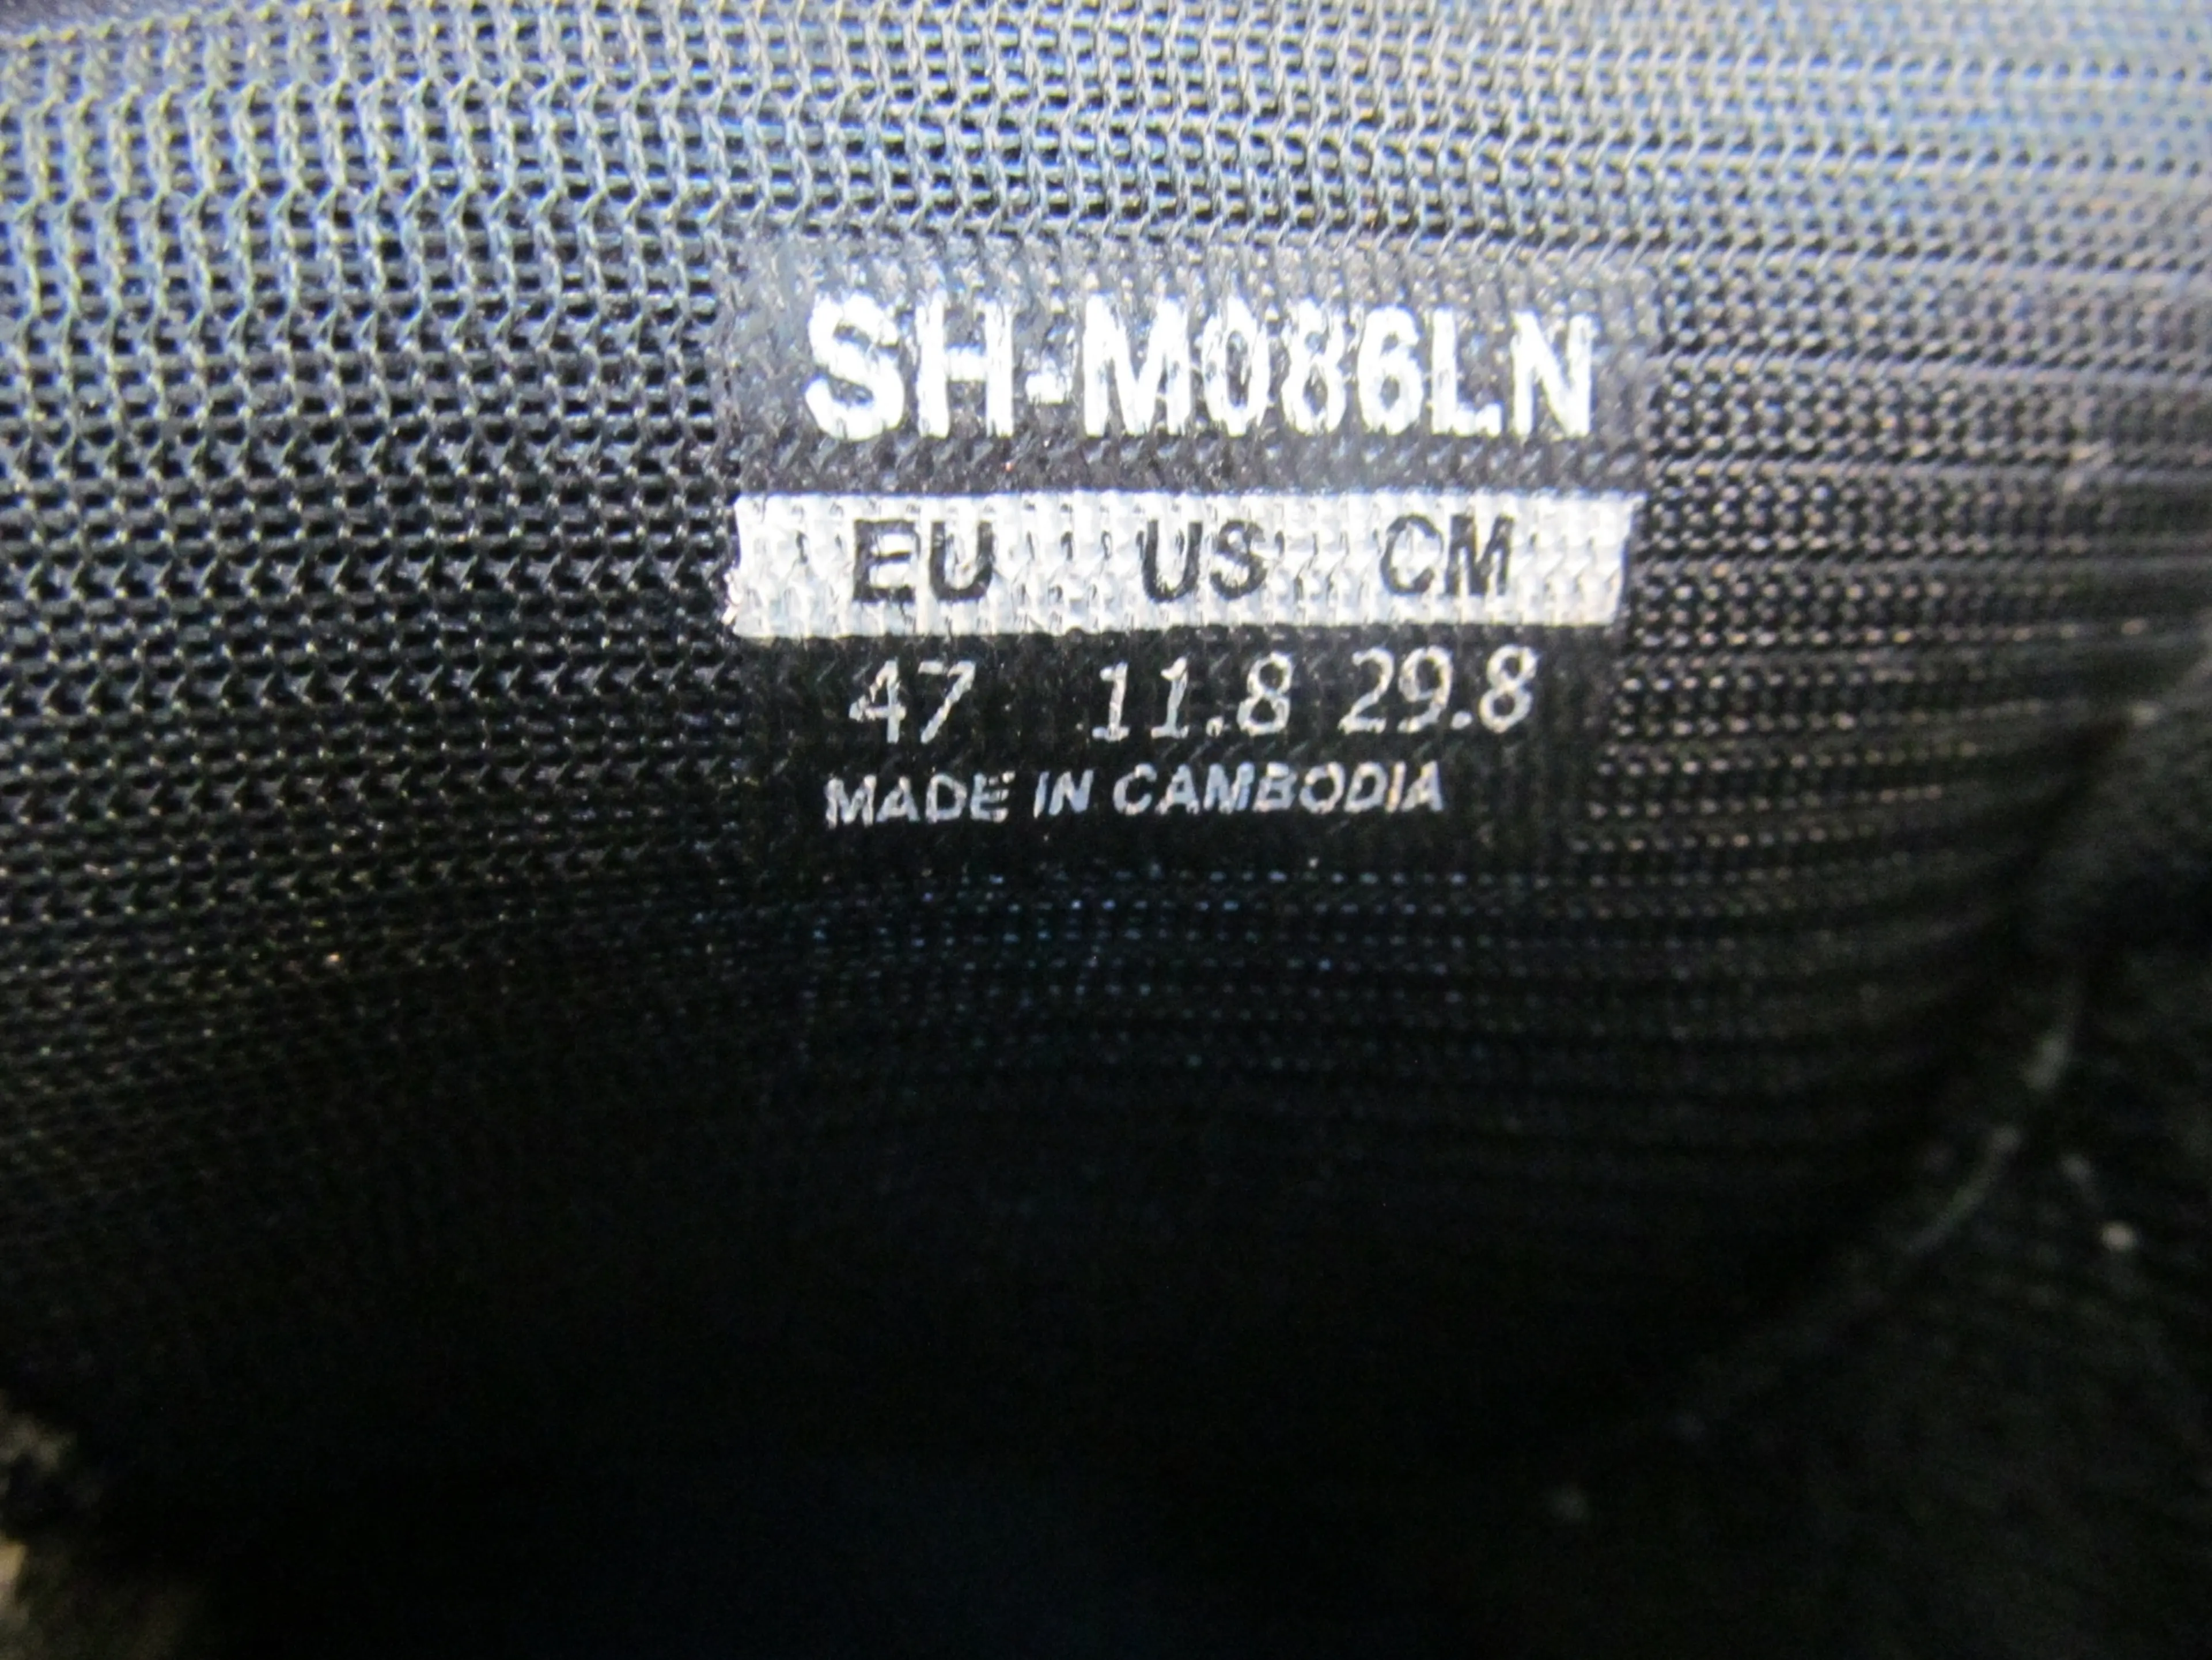 3. Pantofi Shimano SH-M086LN nr 47, 29.8 cm